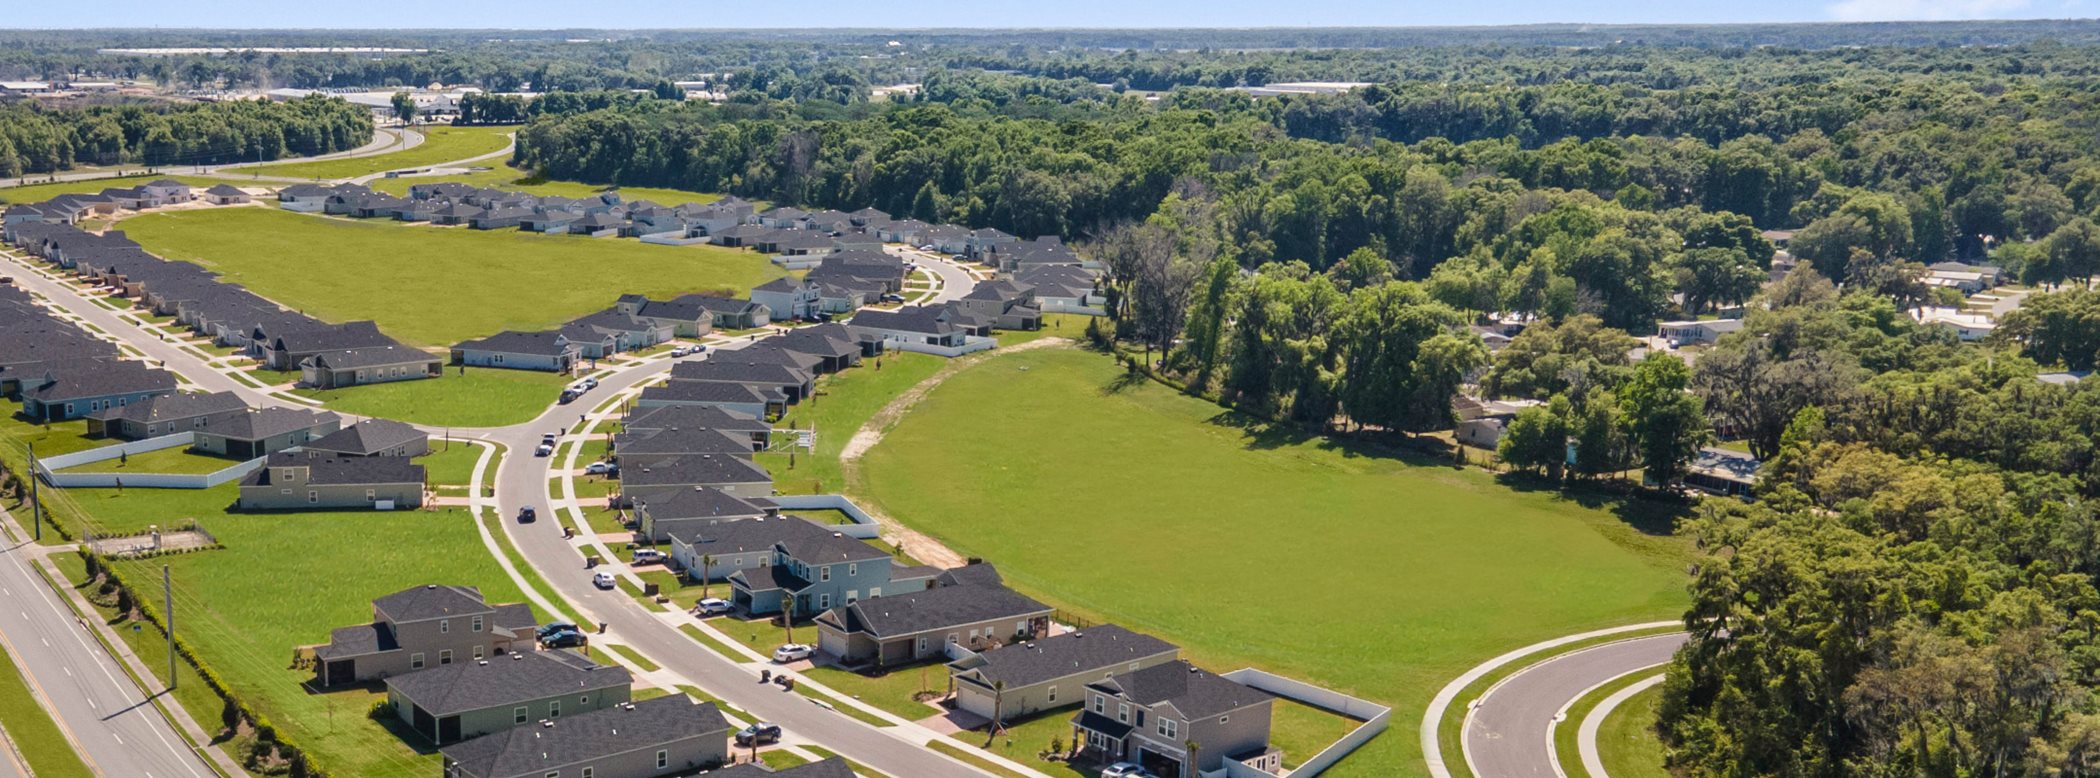 Aerial view of Heath Preserve community